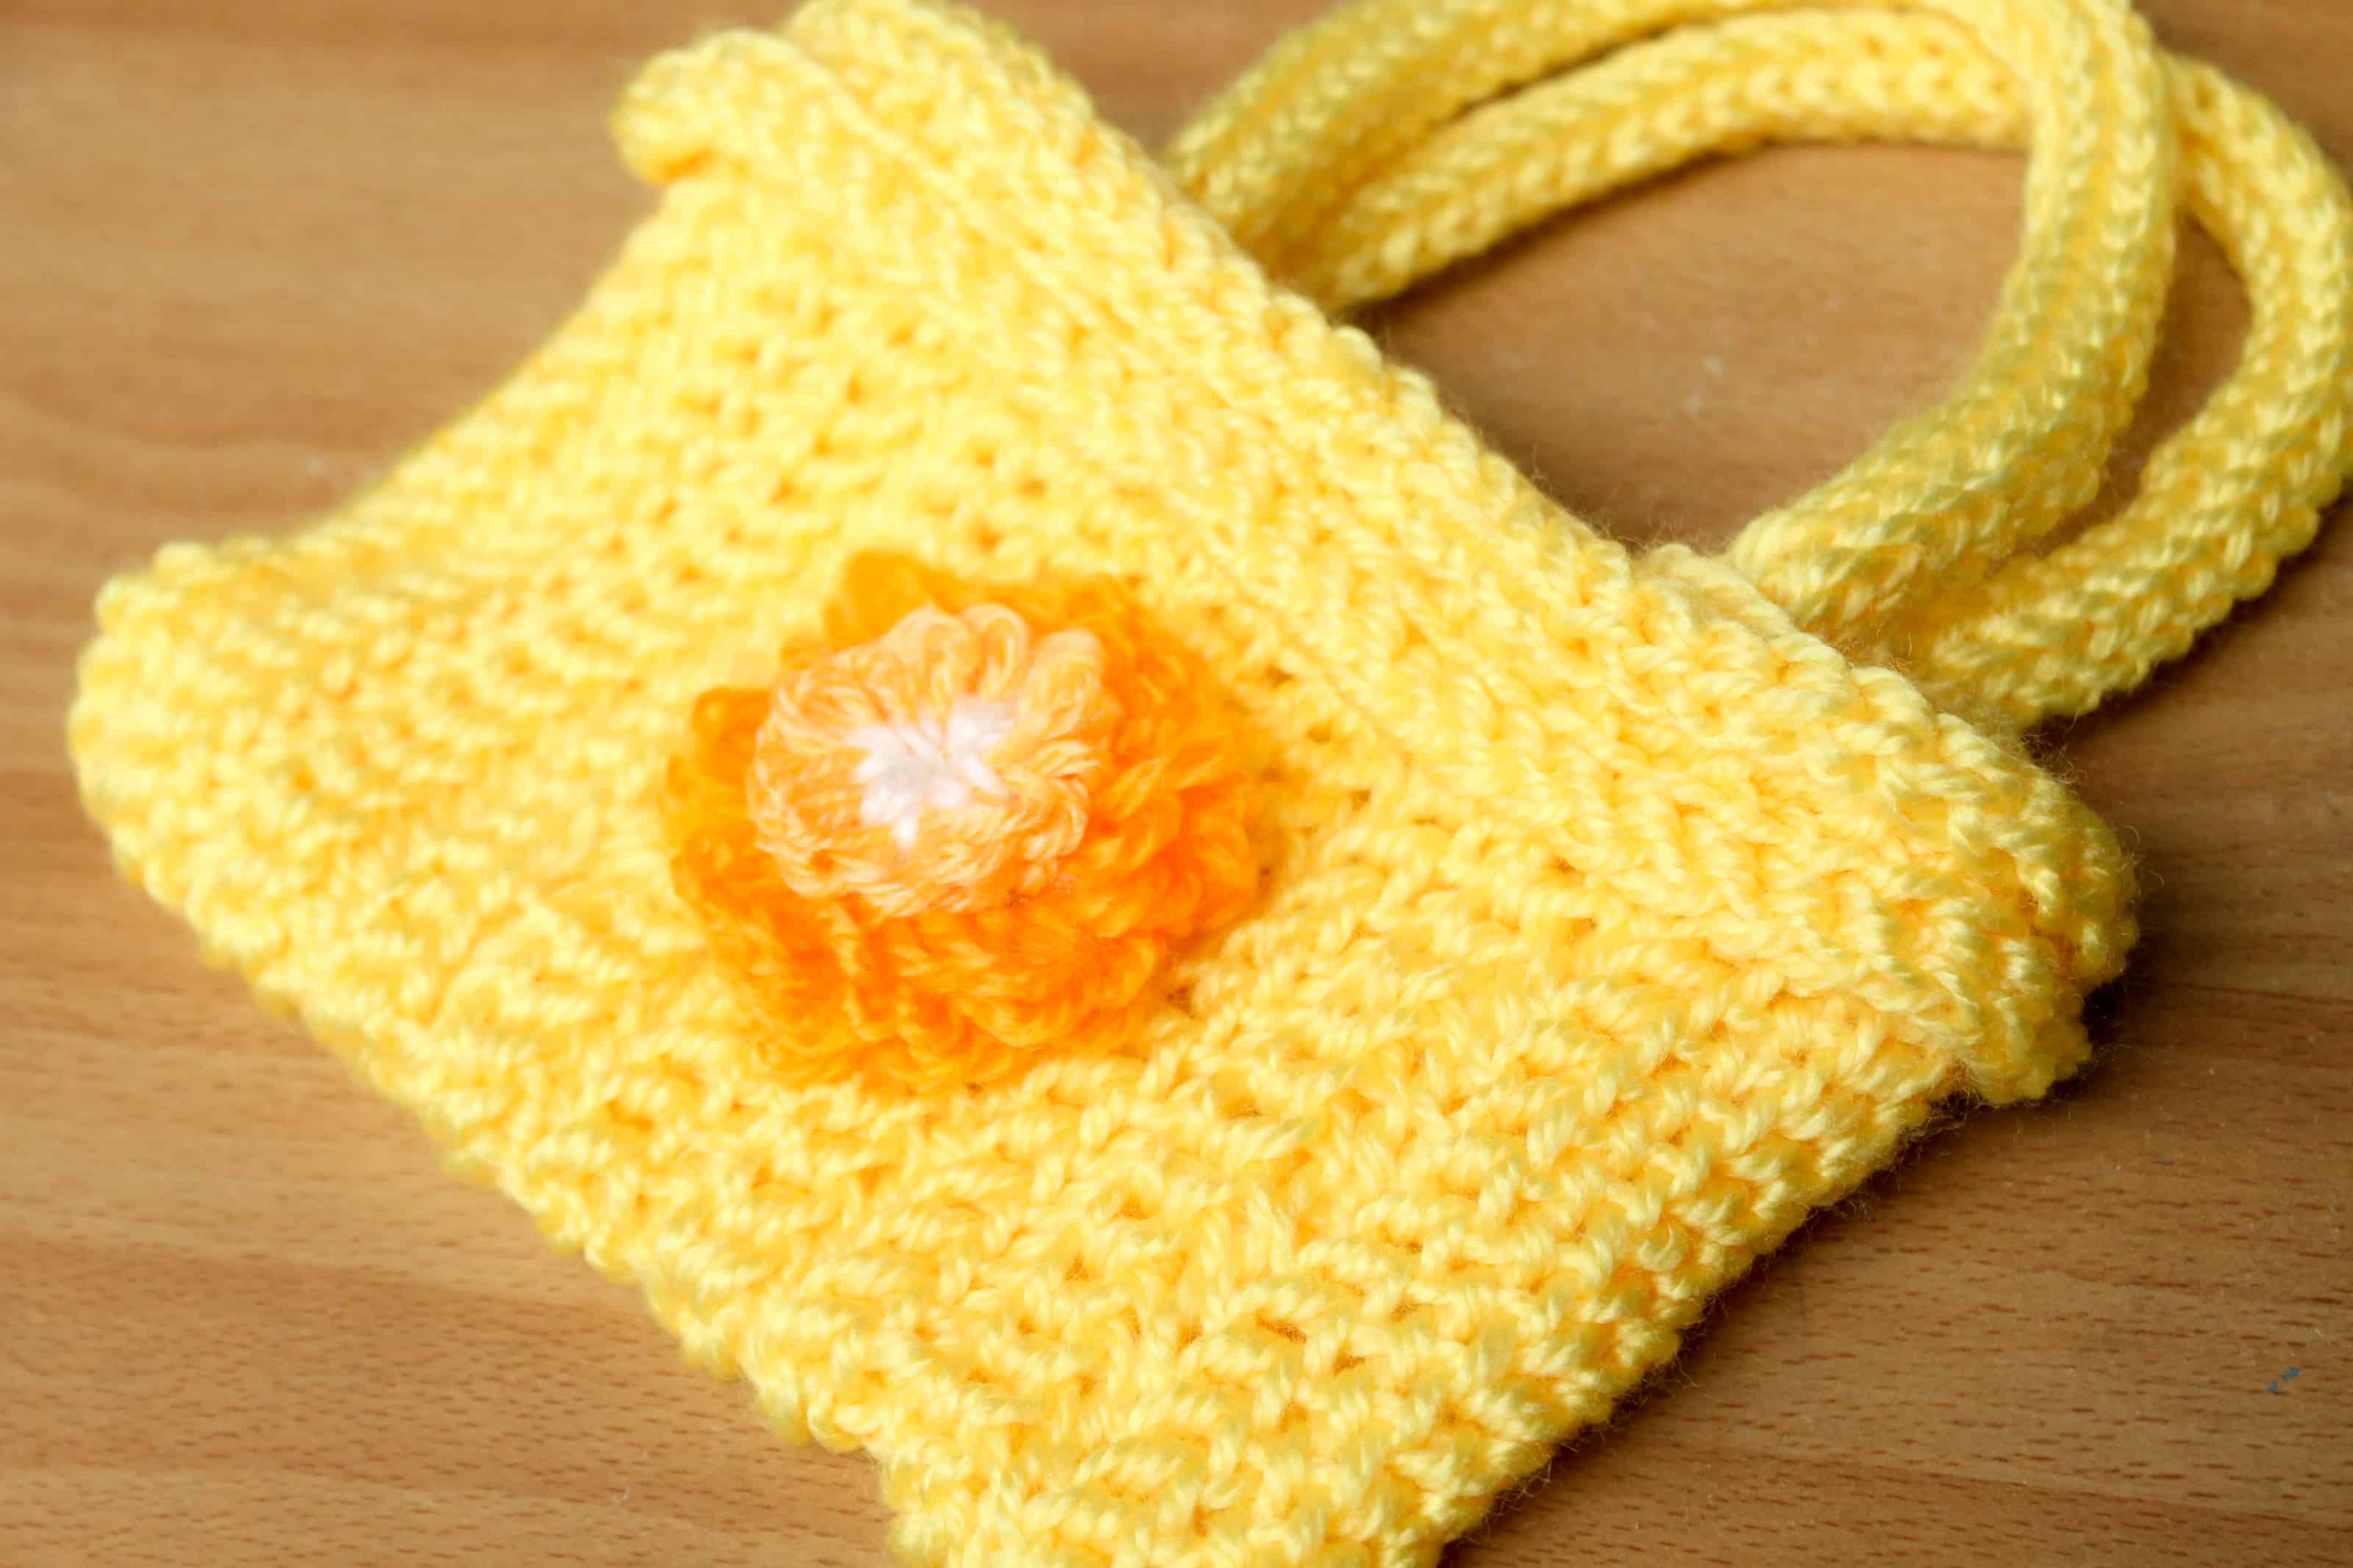 Small spool knit floral purse